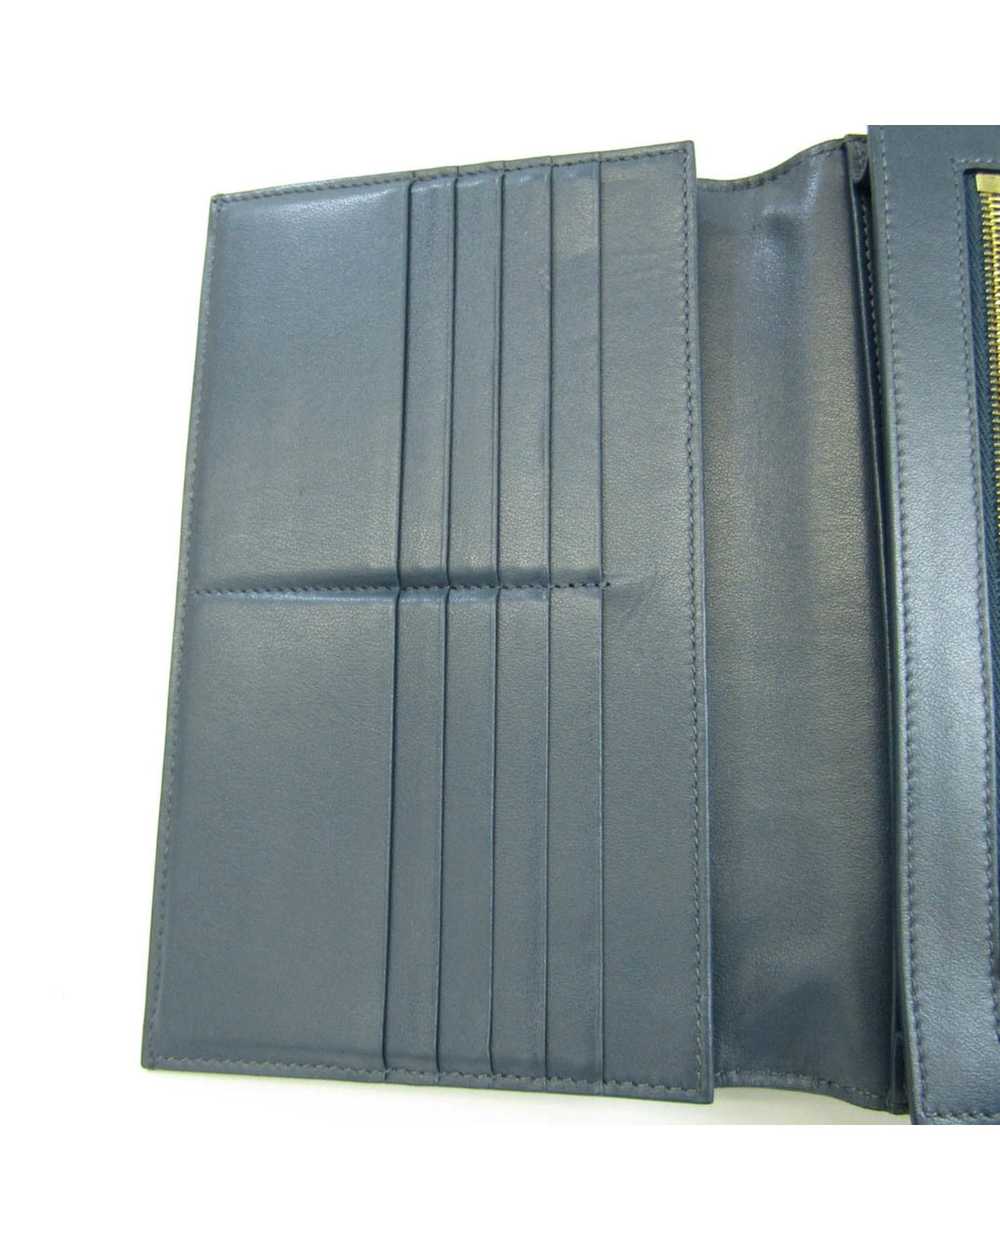 Celine Navy Leather Wallet - Practical and Elegant - image 9